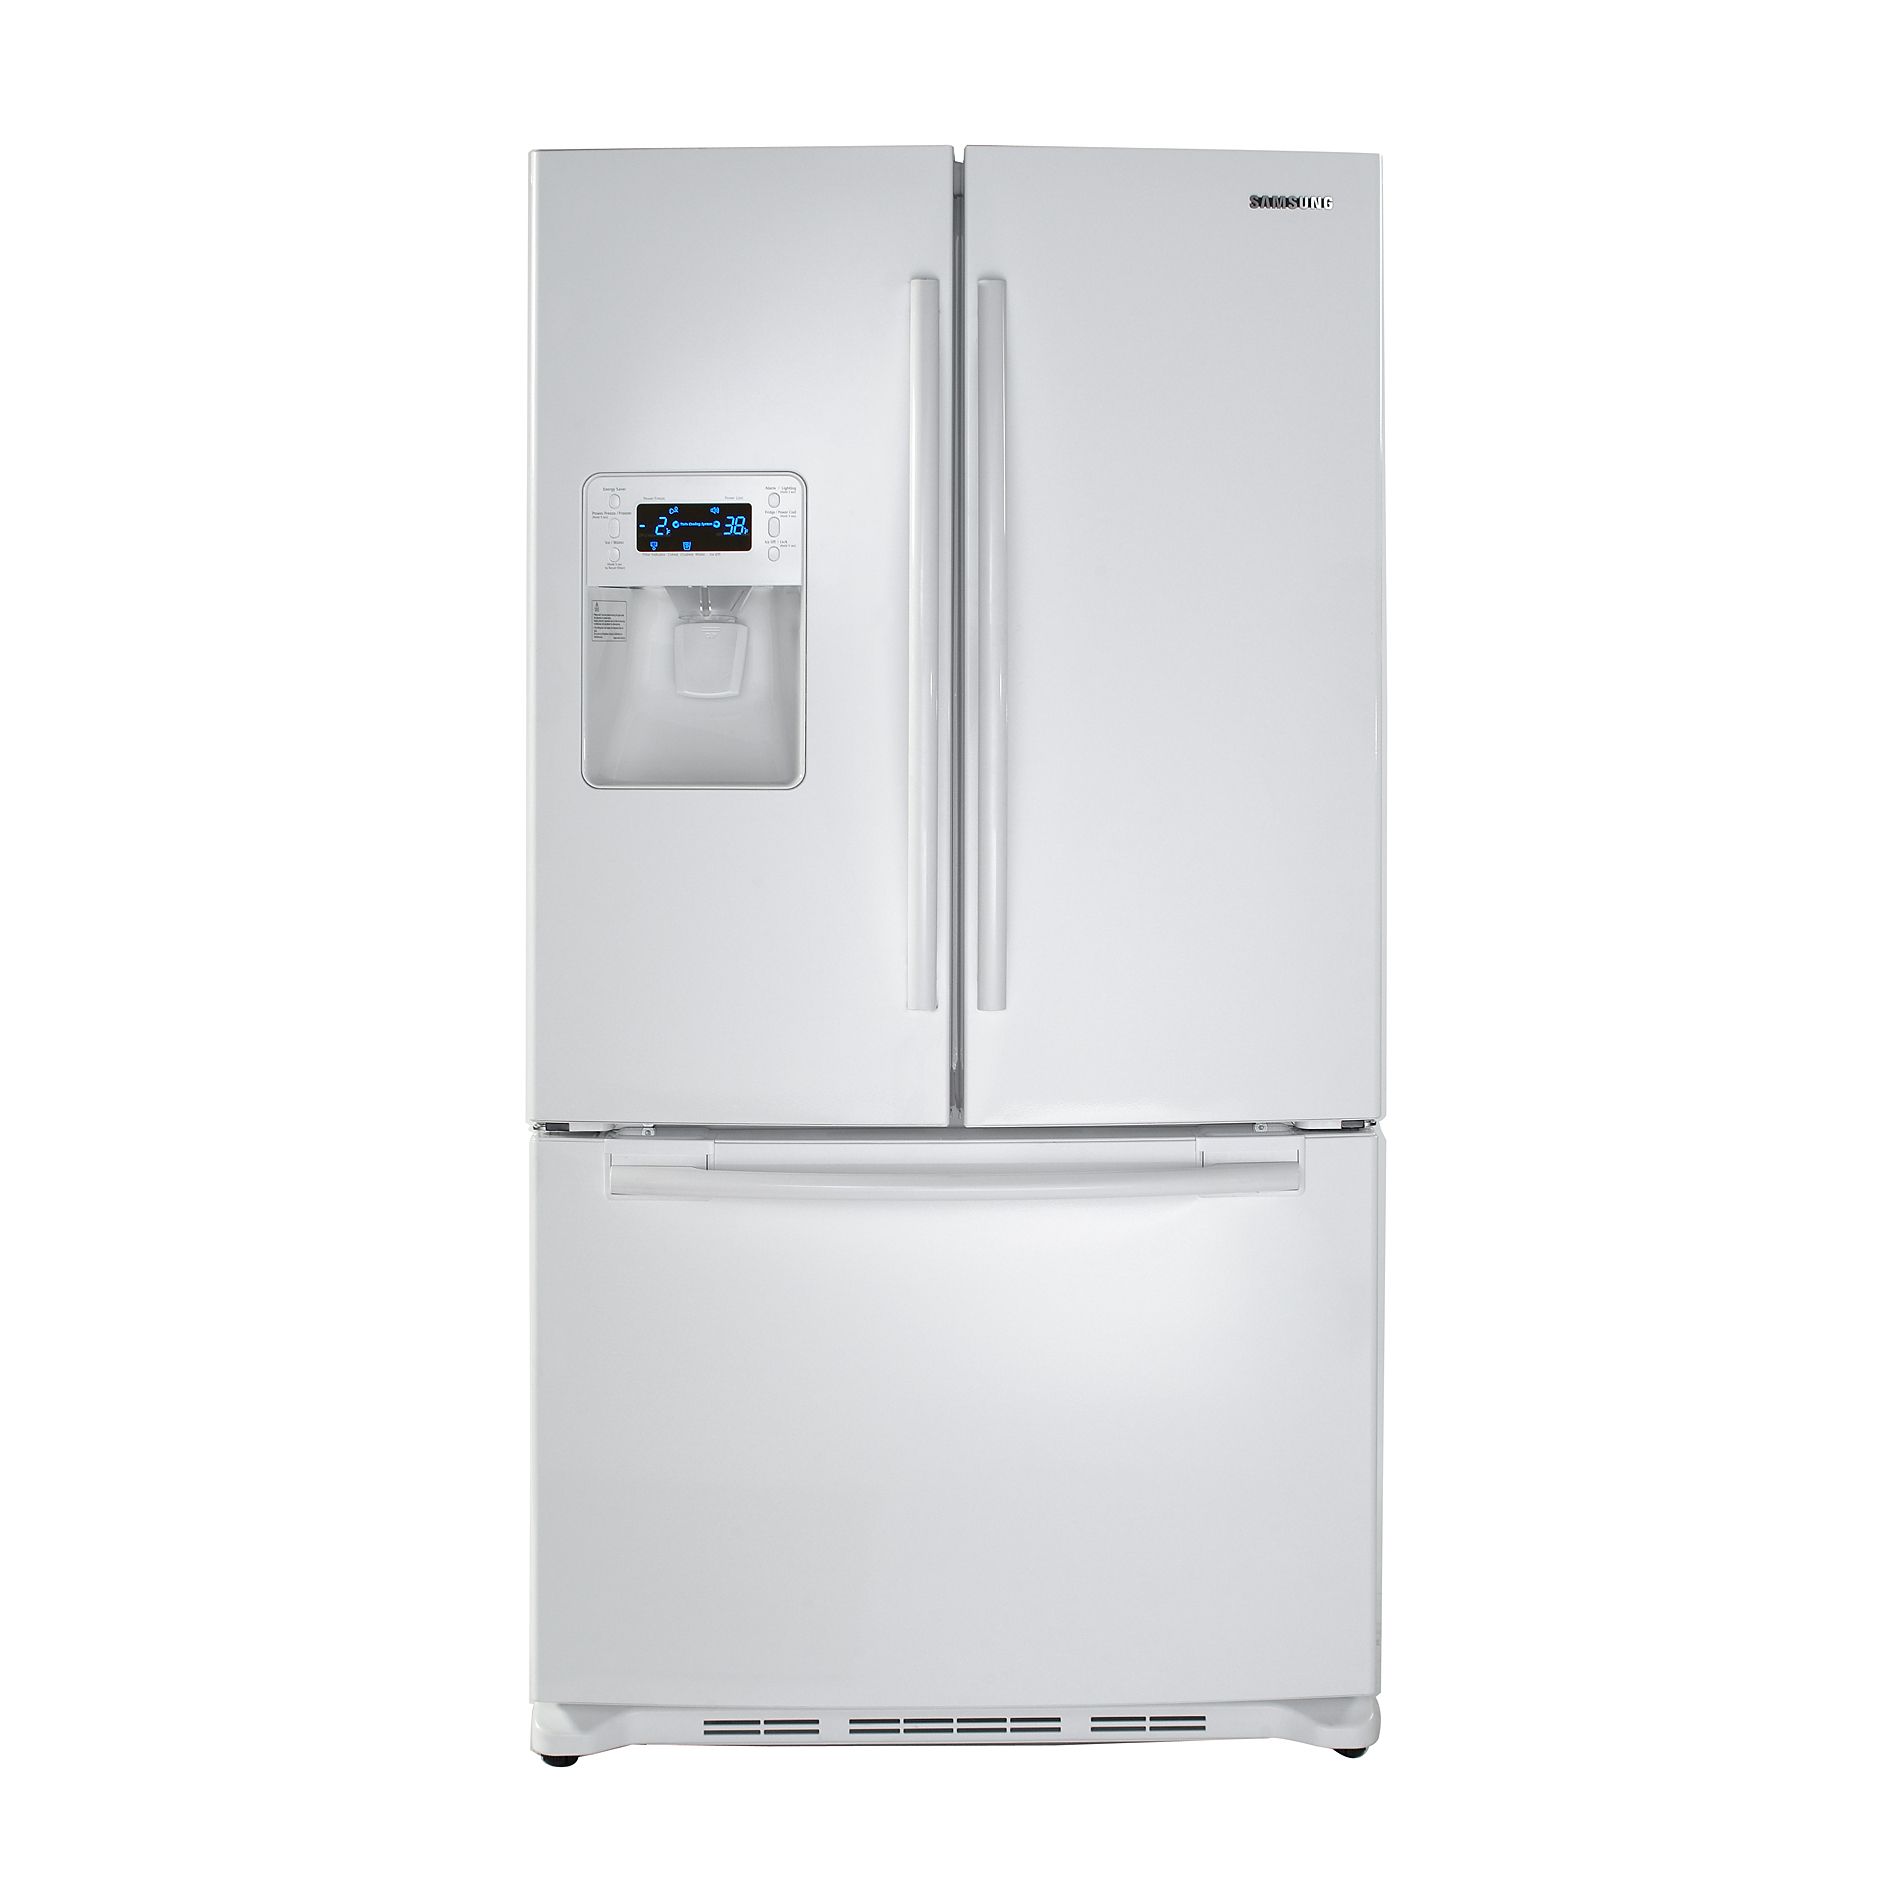 Samsung 26.0 cu. ft. French-Door Bottom Freezer Refrigerator,